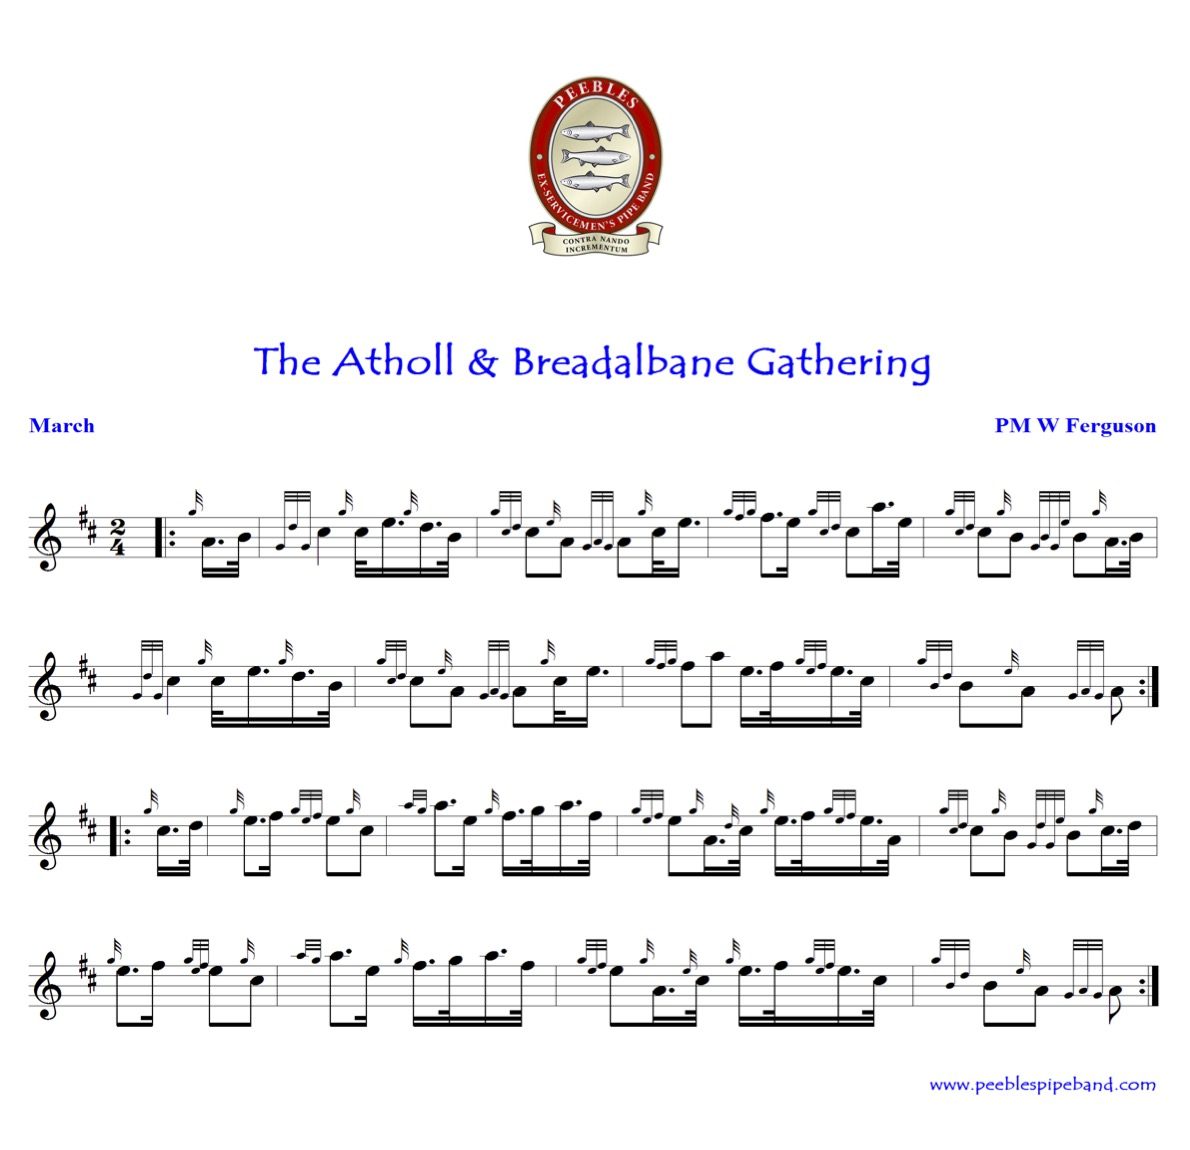 The Atholl & Breadalbane Gathering